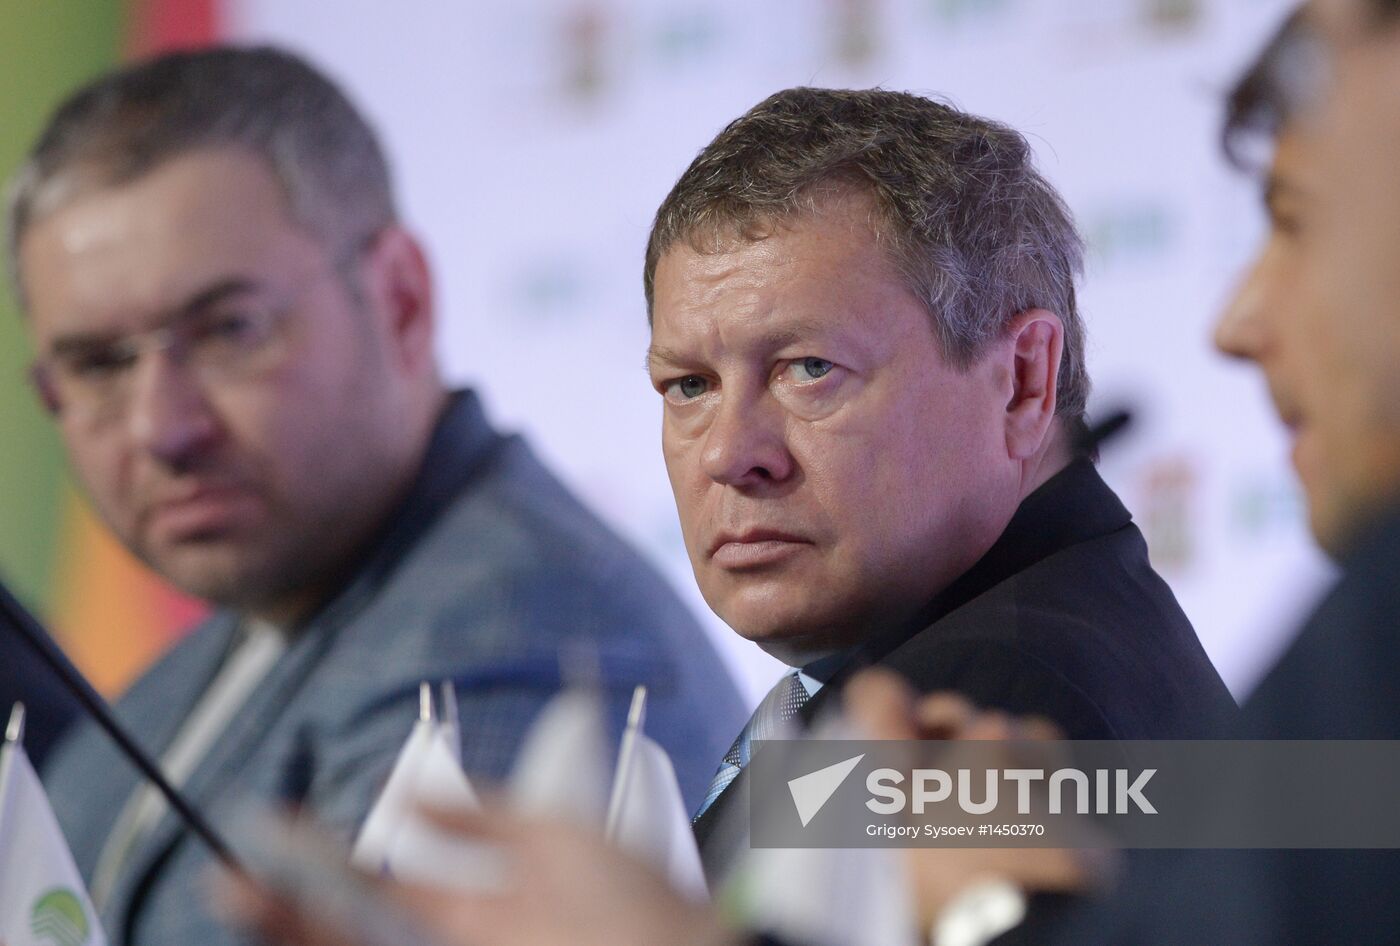 Ivanov, Powell meet at Russia Forum 2013